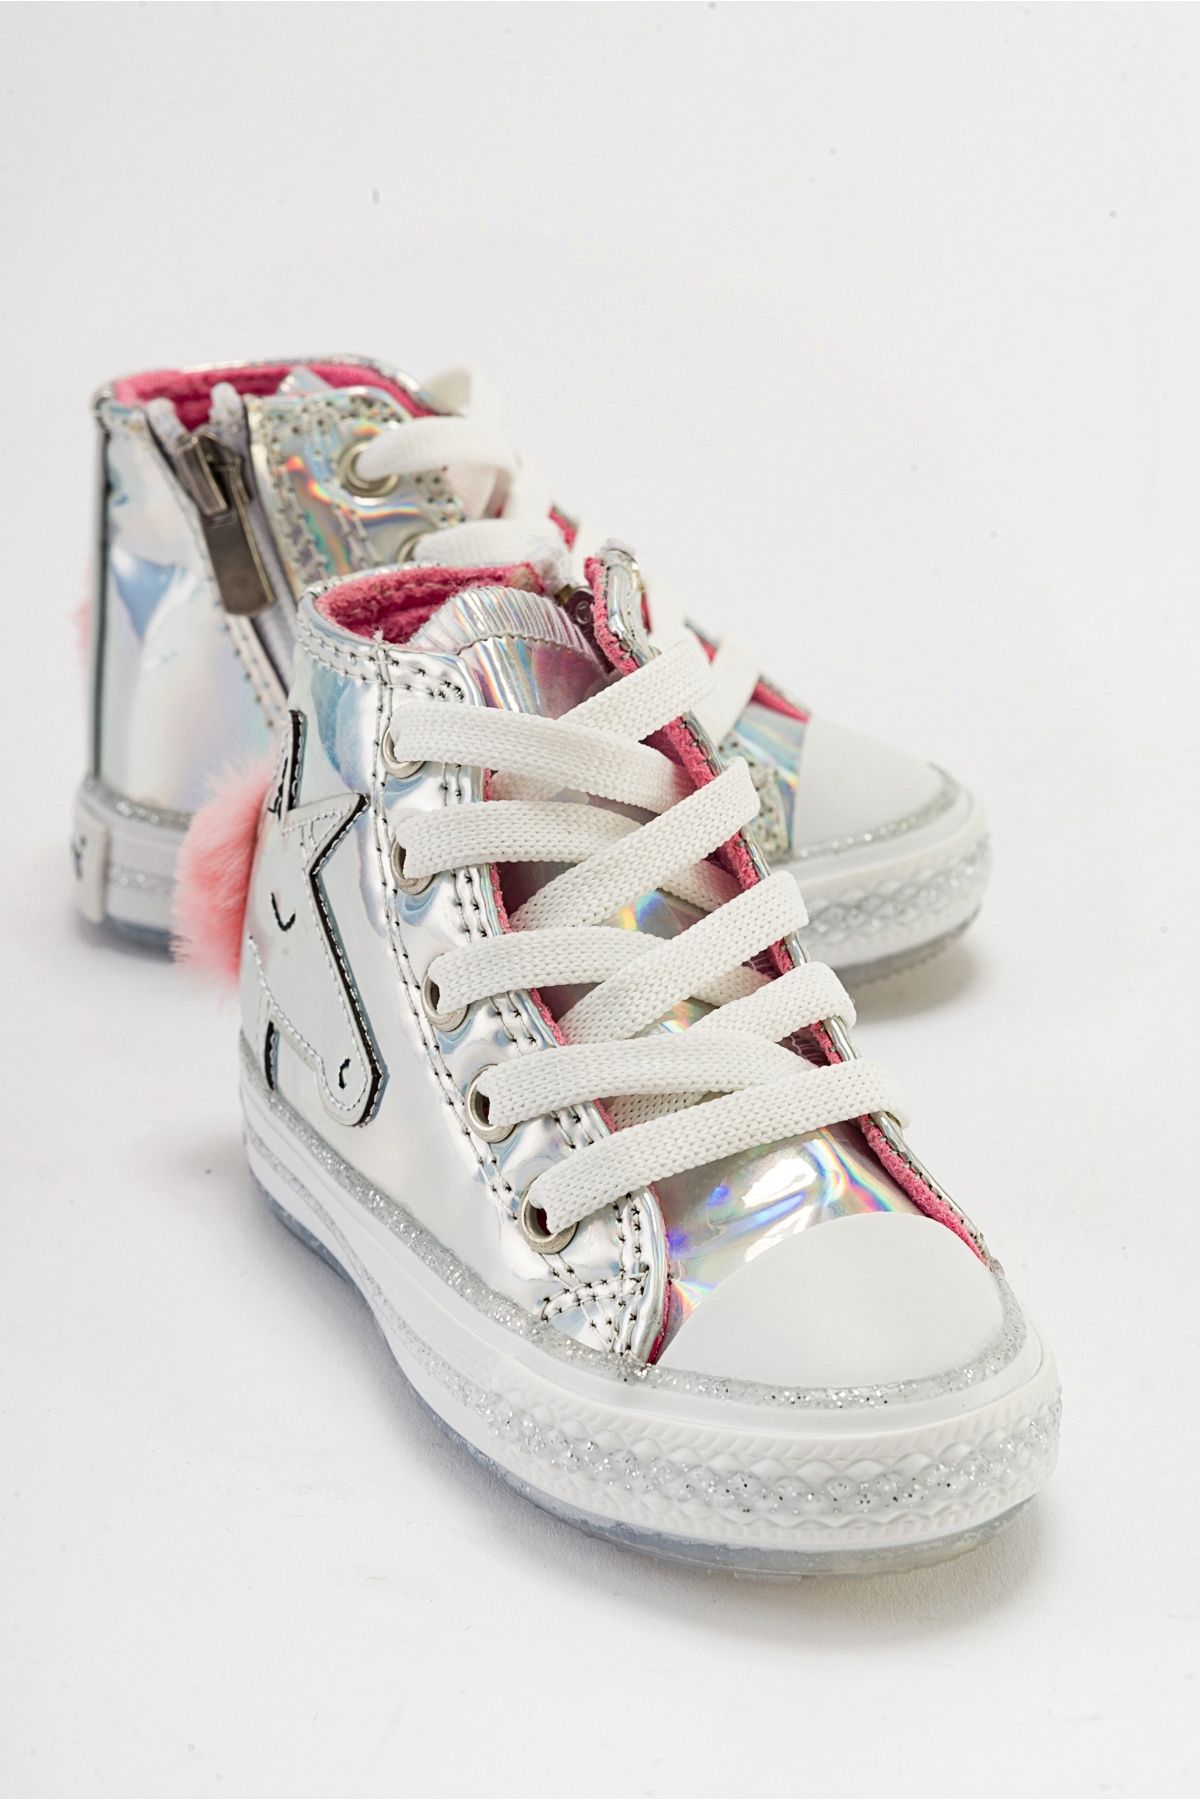 mnpc Kız Çocuk Hologram Atlı Sneakers Anatomik Ayakkabı